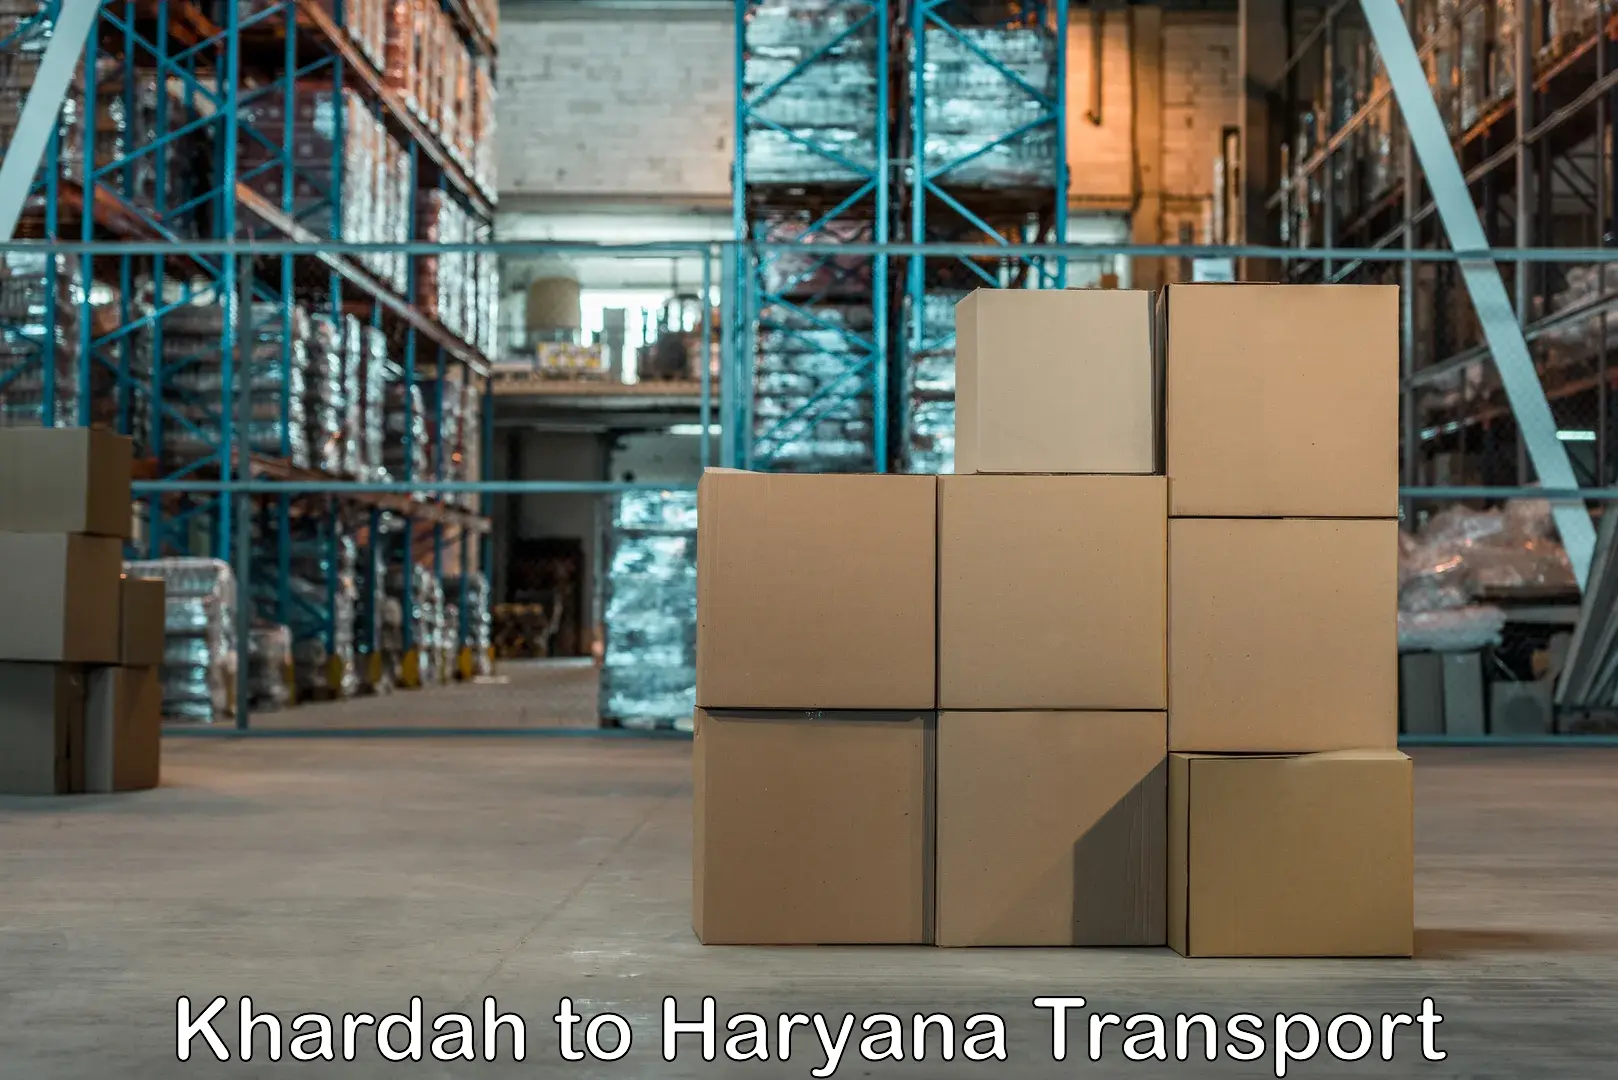 Truck transport companies in India Khardah to Haryana